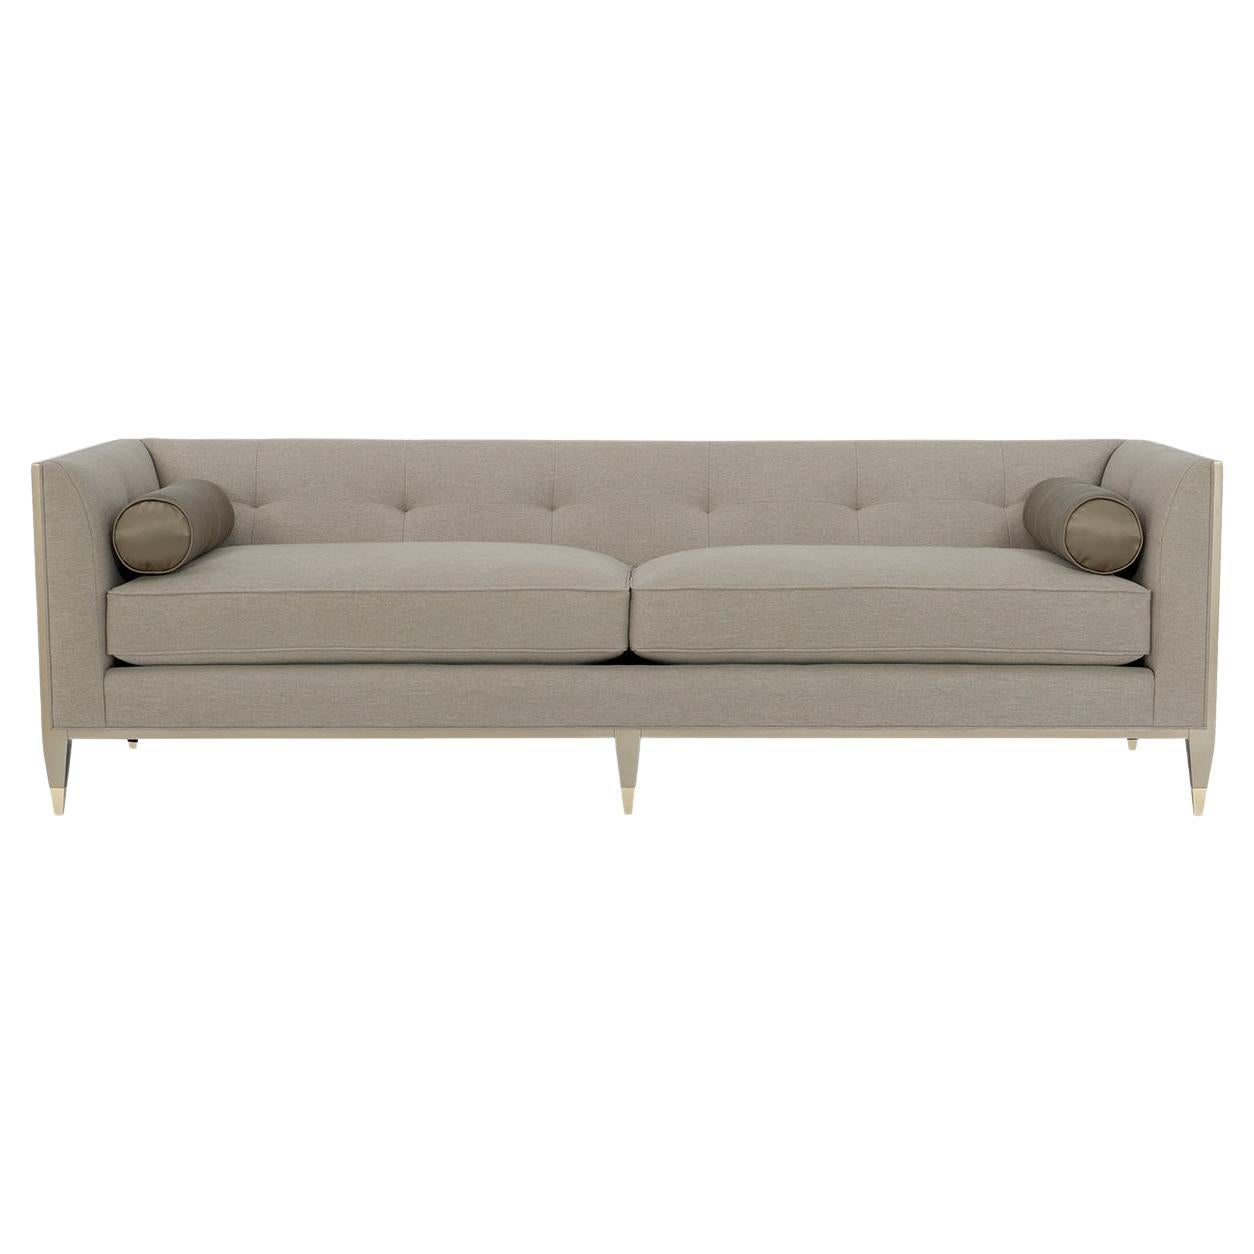 European Mid-Century Sofa